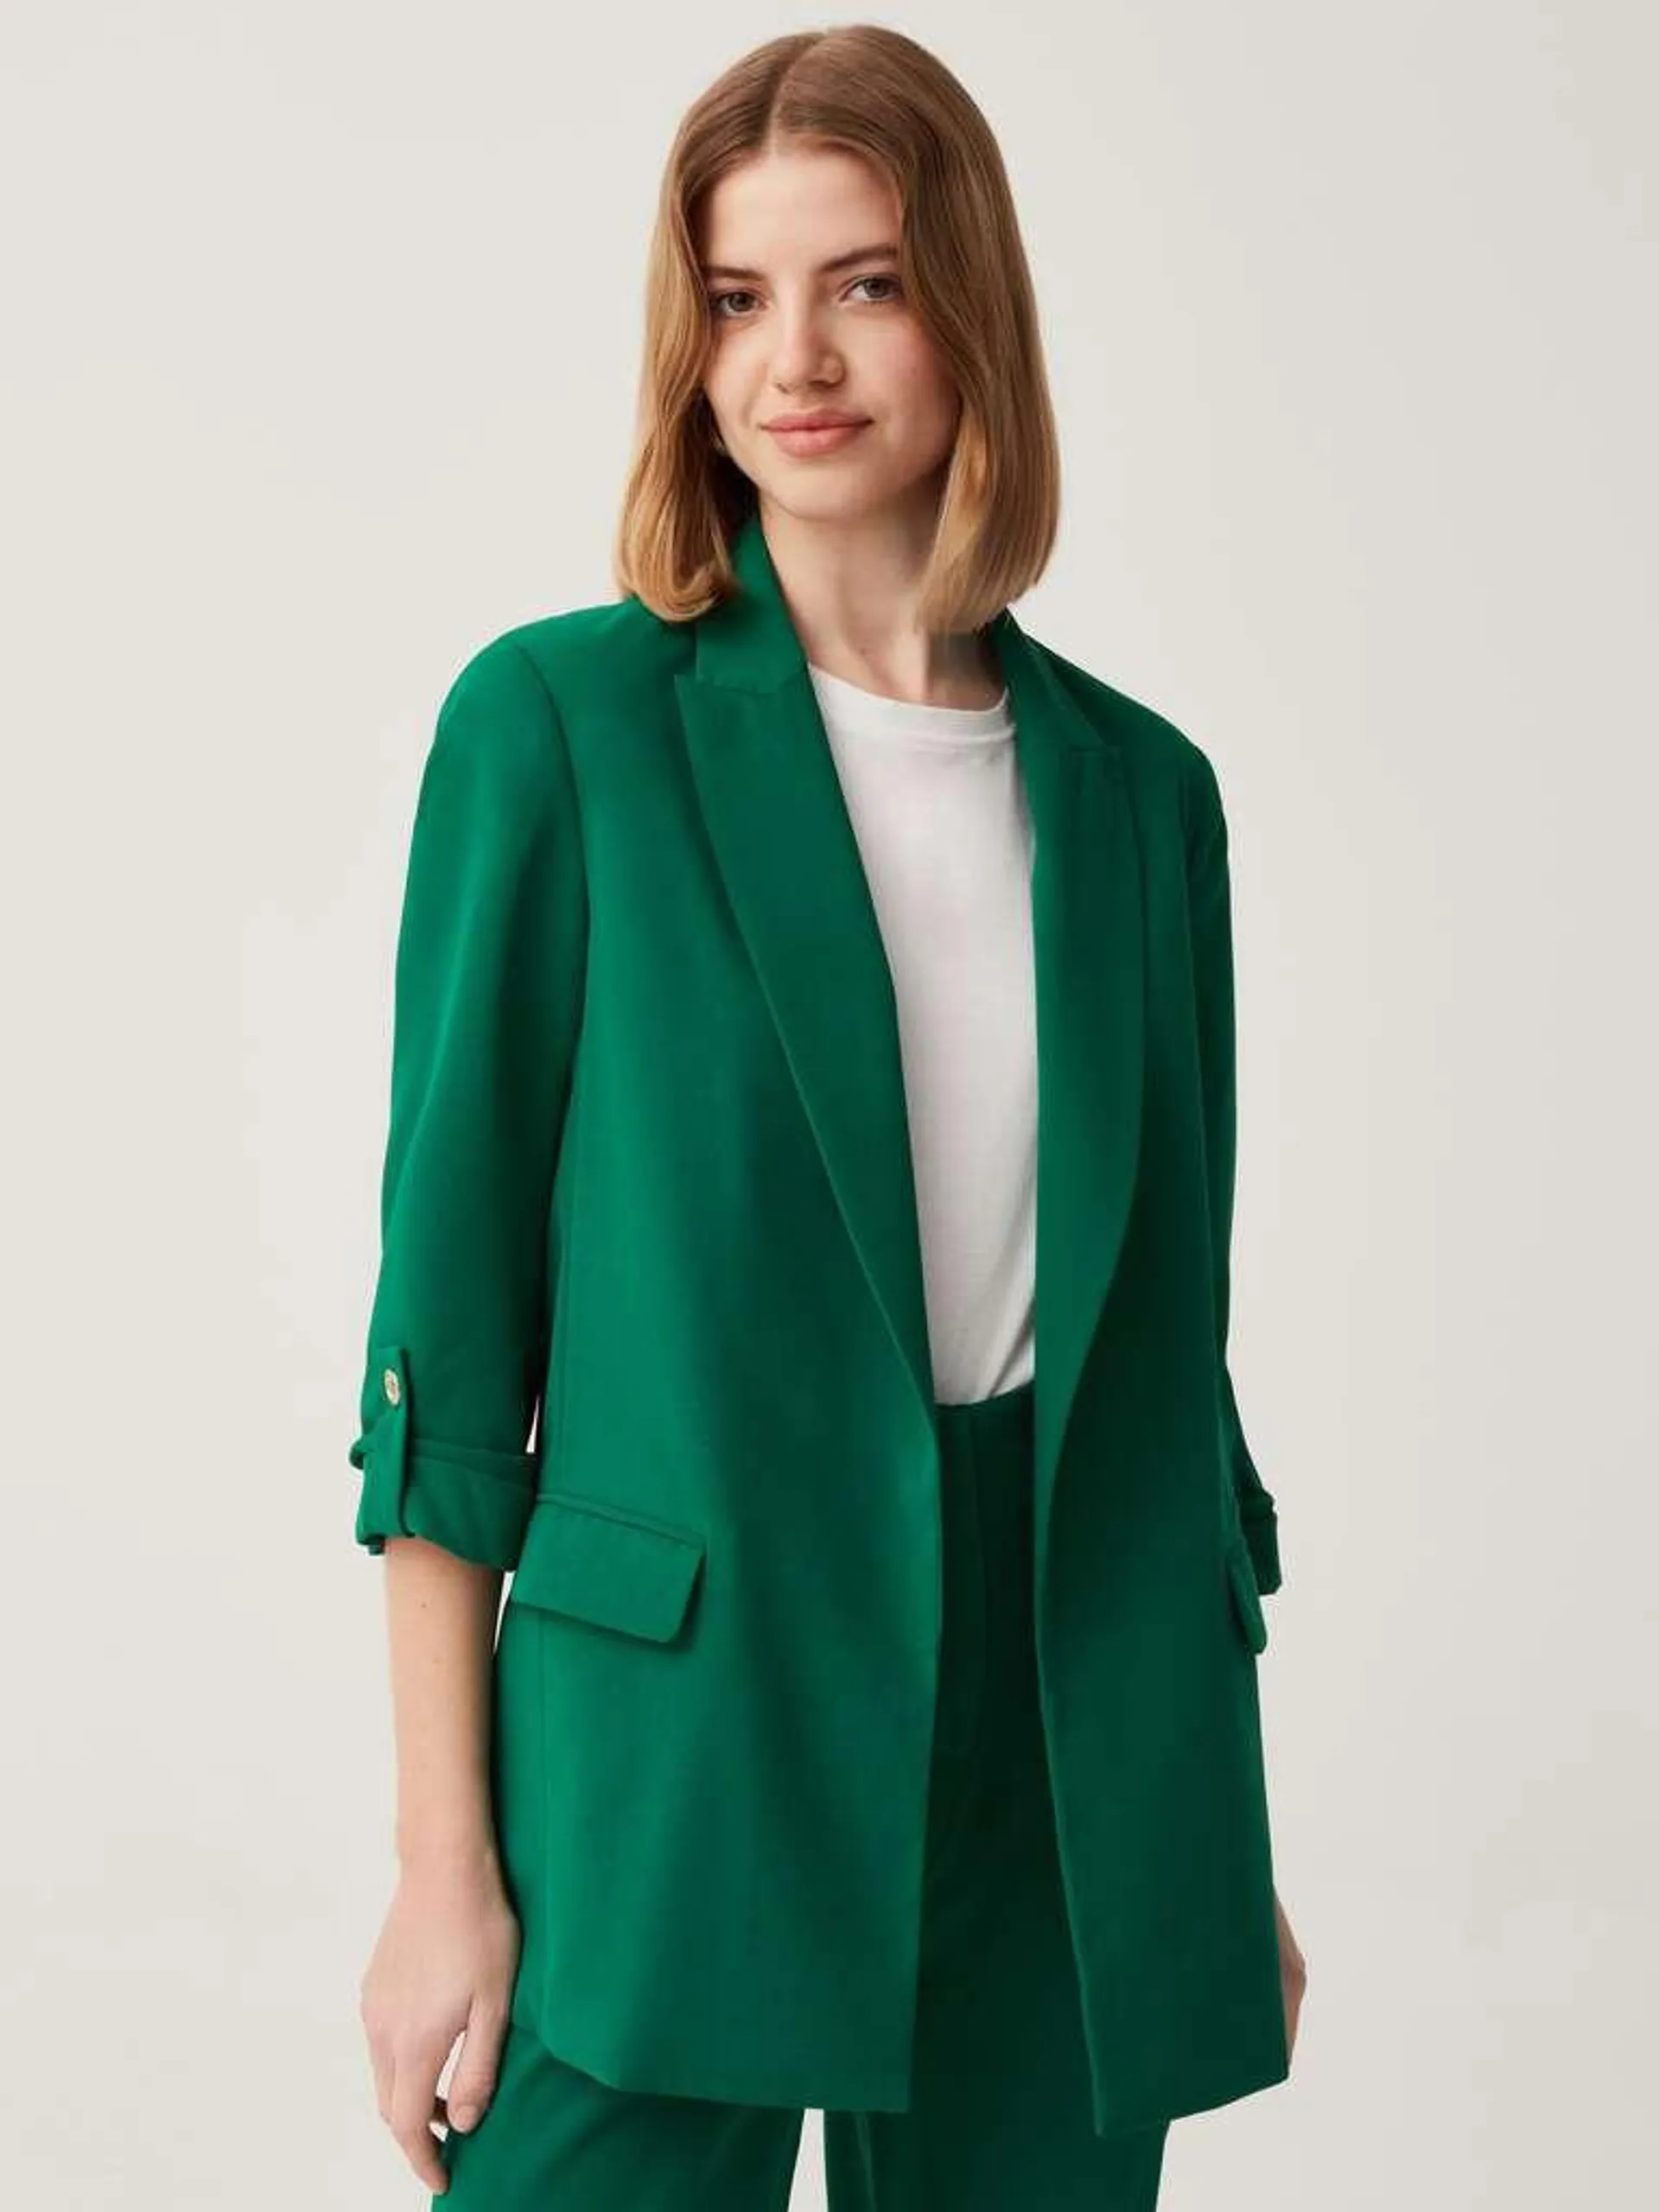 Emerald Green Blazer with three-quarter sleeves